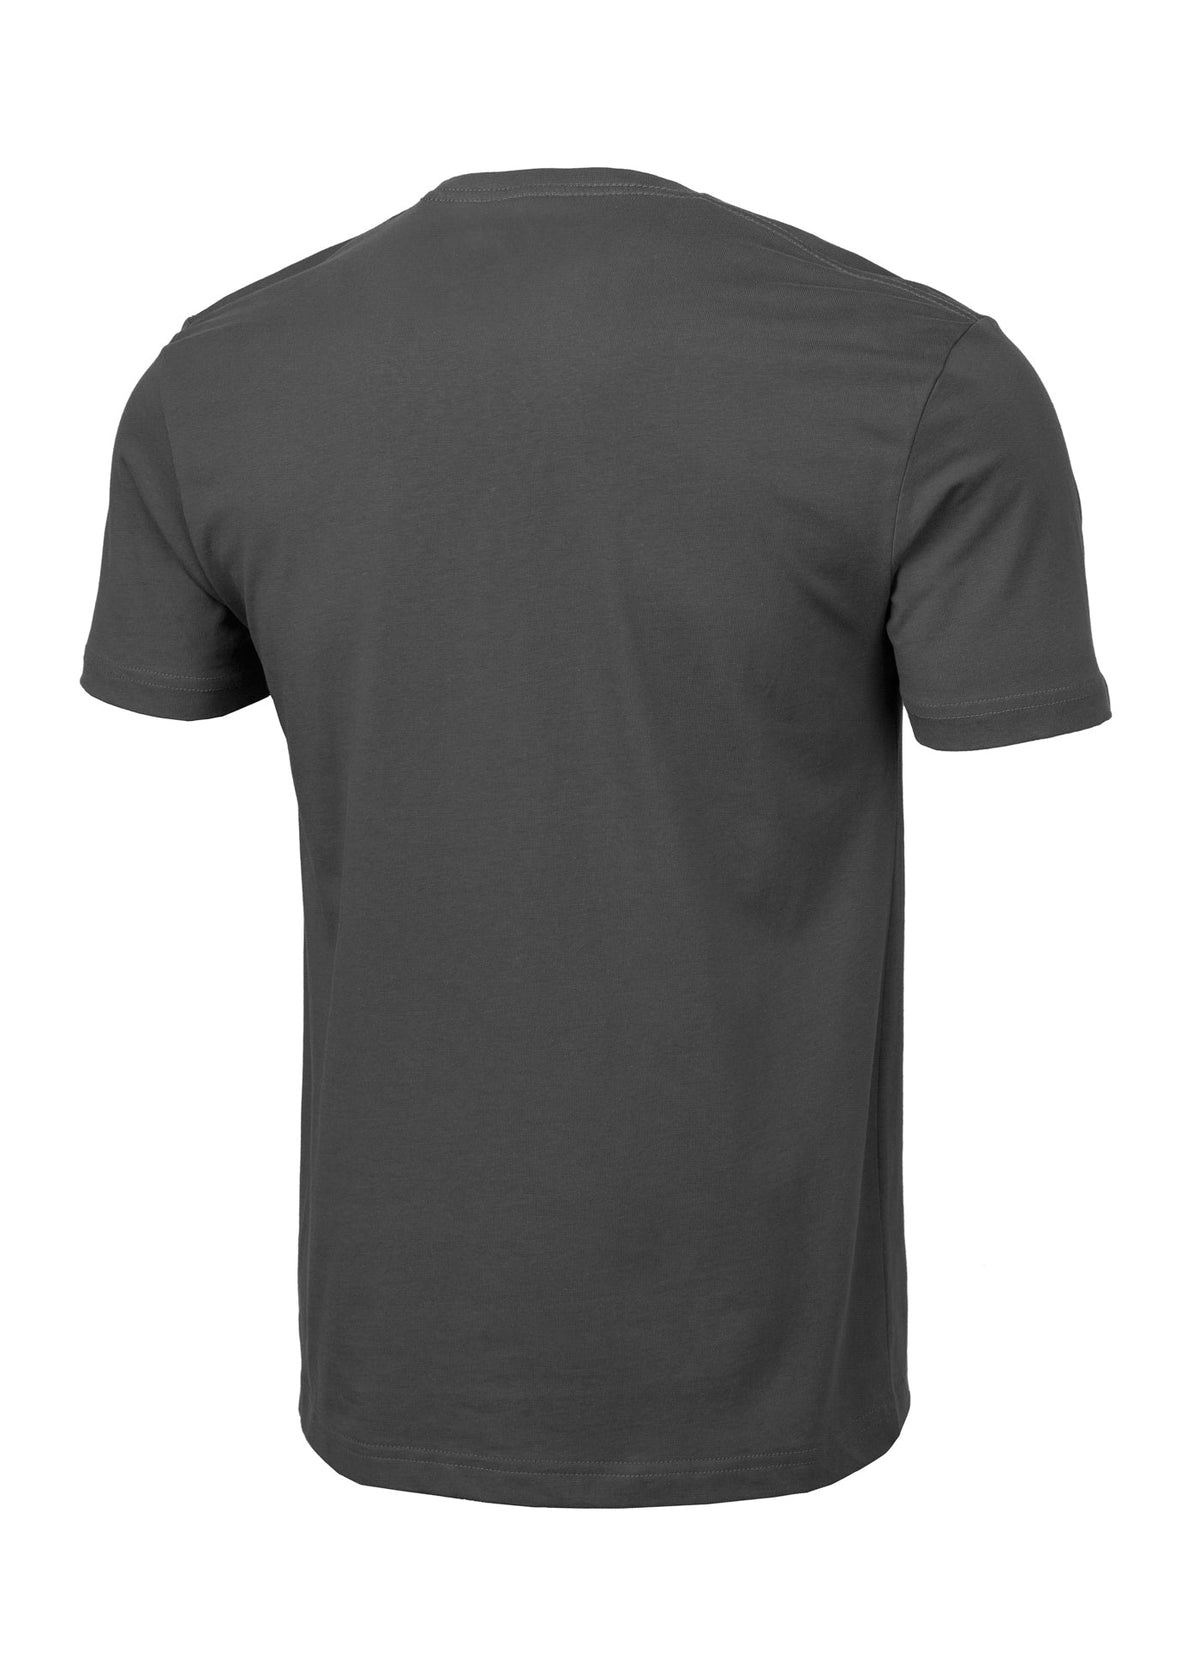 SMALL LOGO 21 Graphite T-Shirt